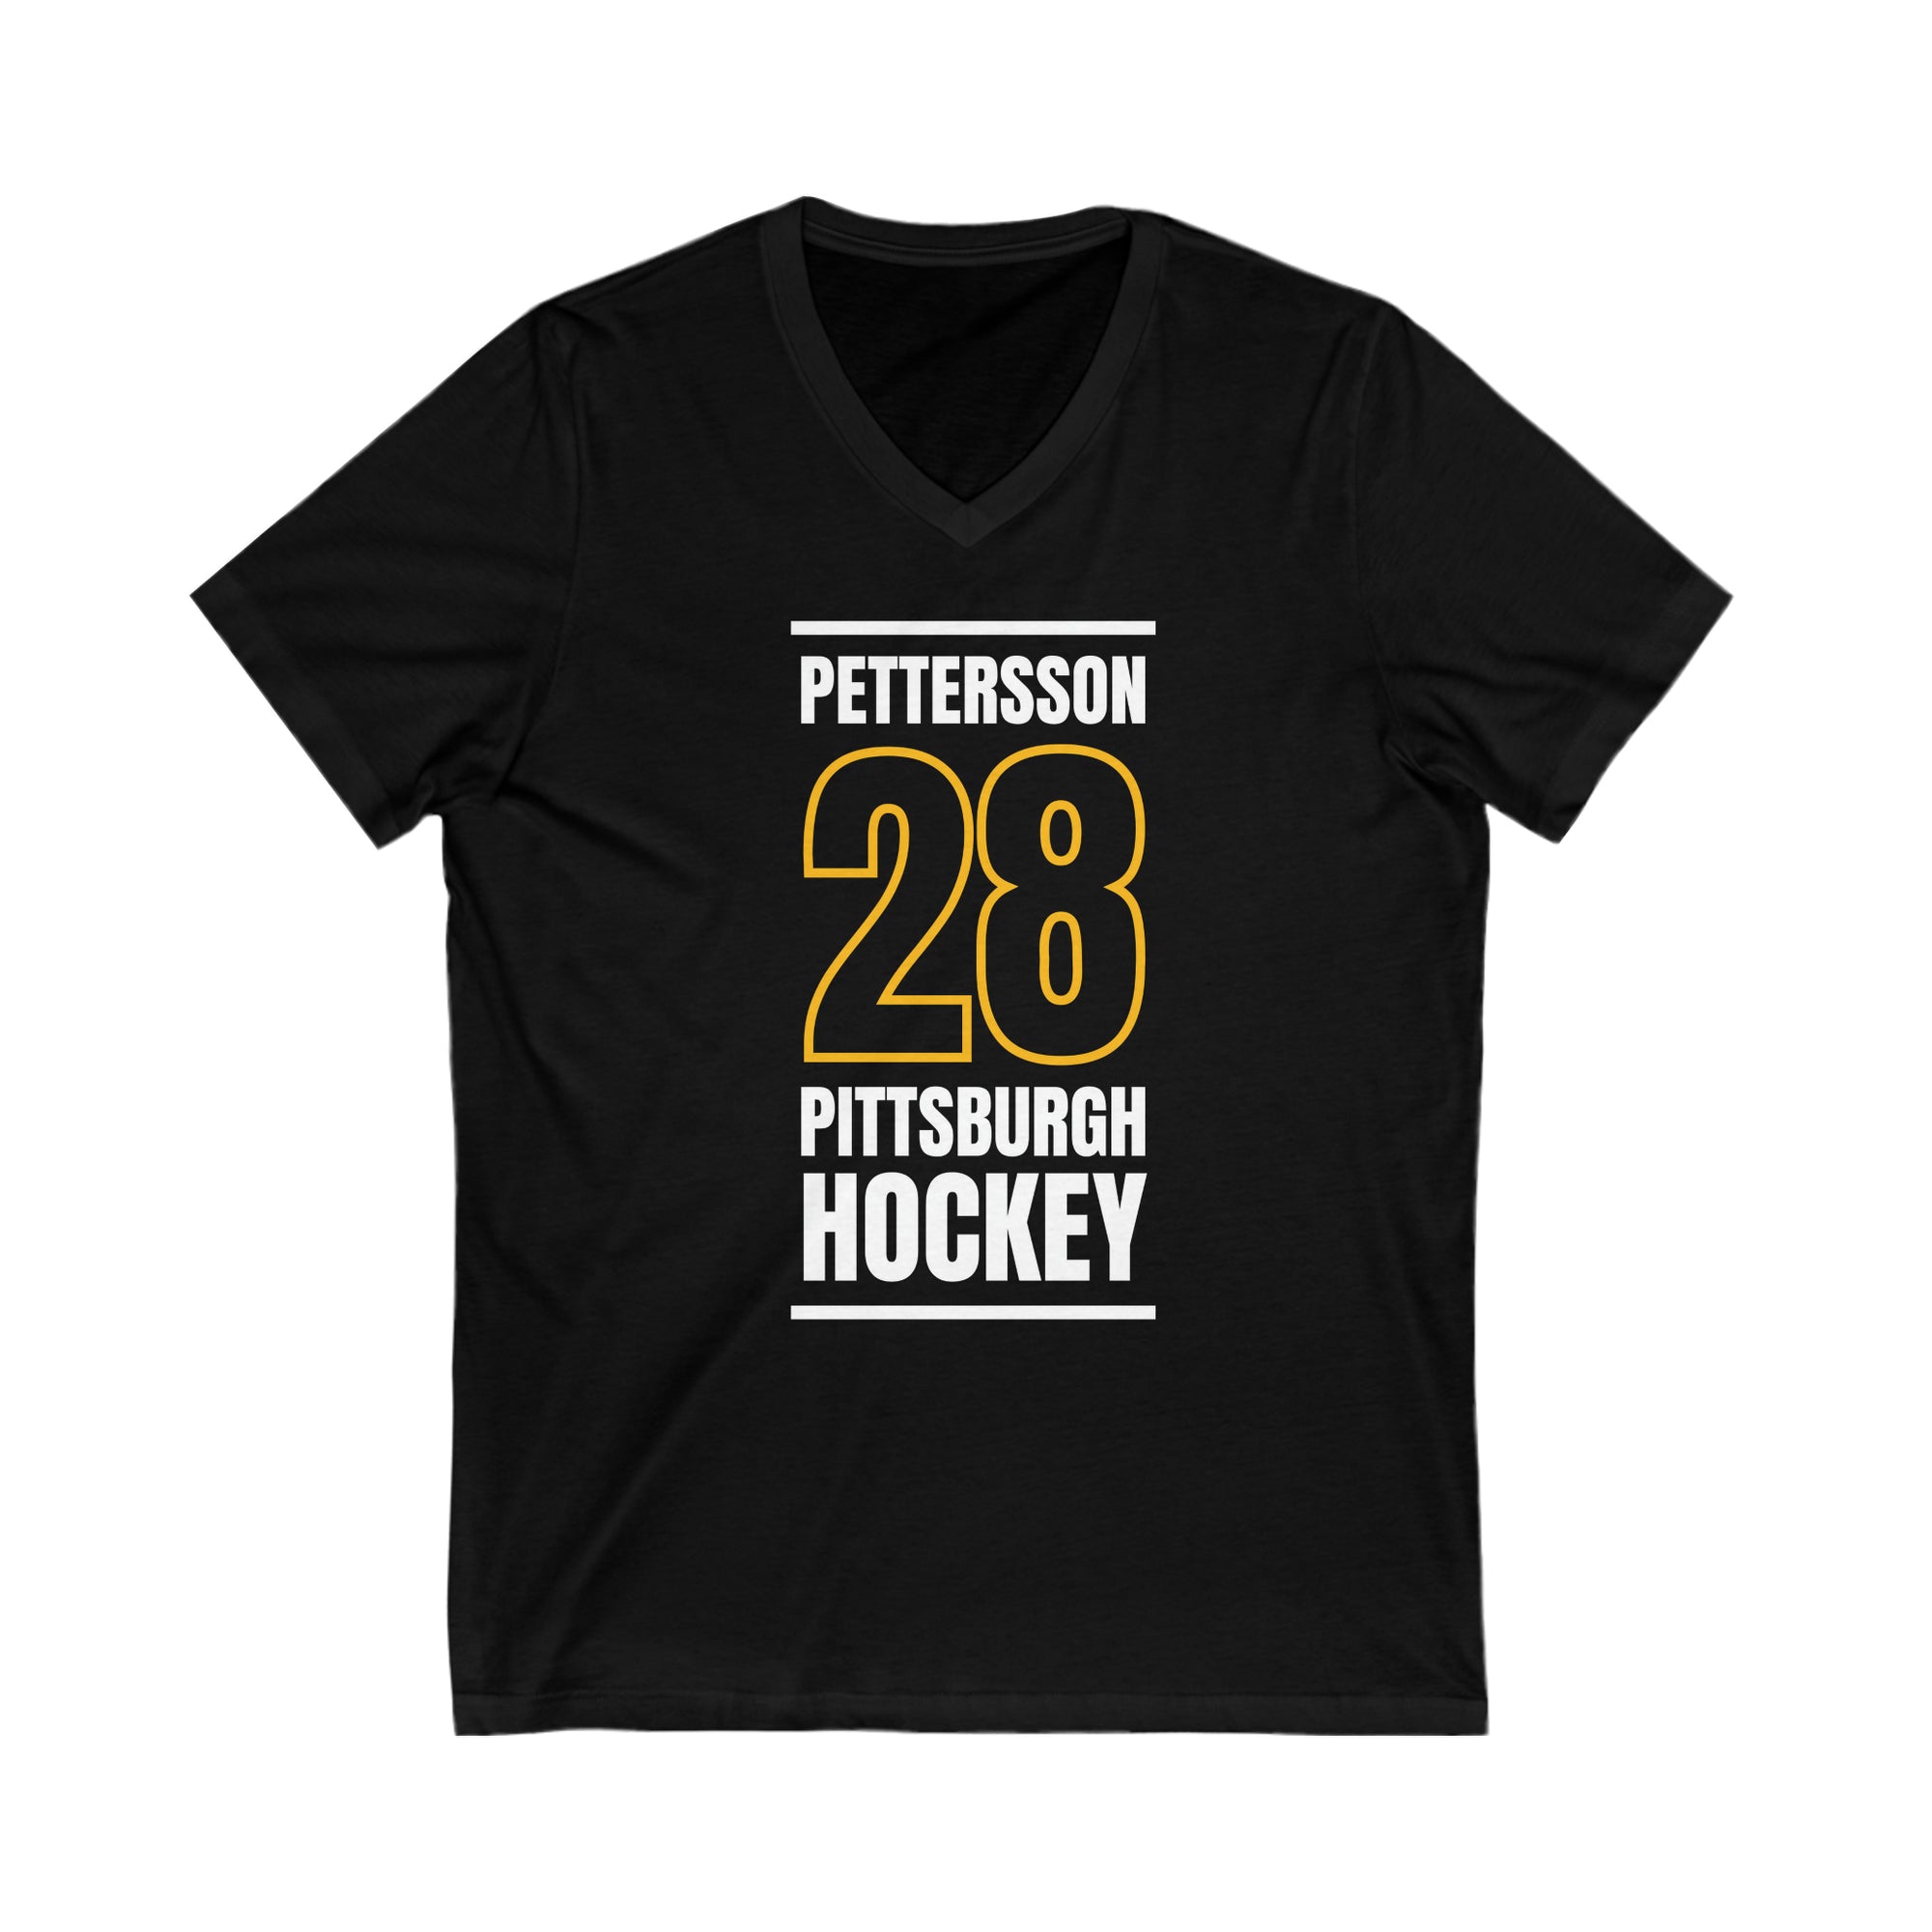 Pettersson 28 Pittsburgh Hockey Black Vertical Design Unisex V-Neck Tee